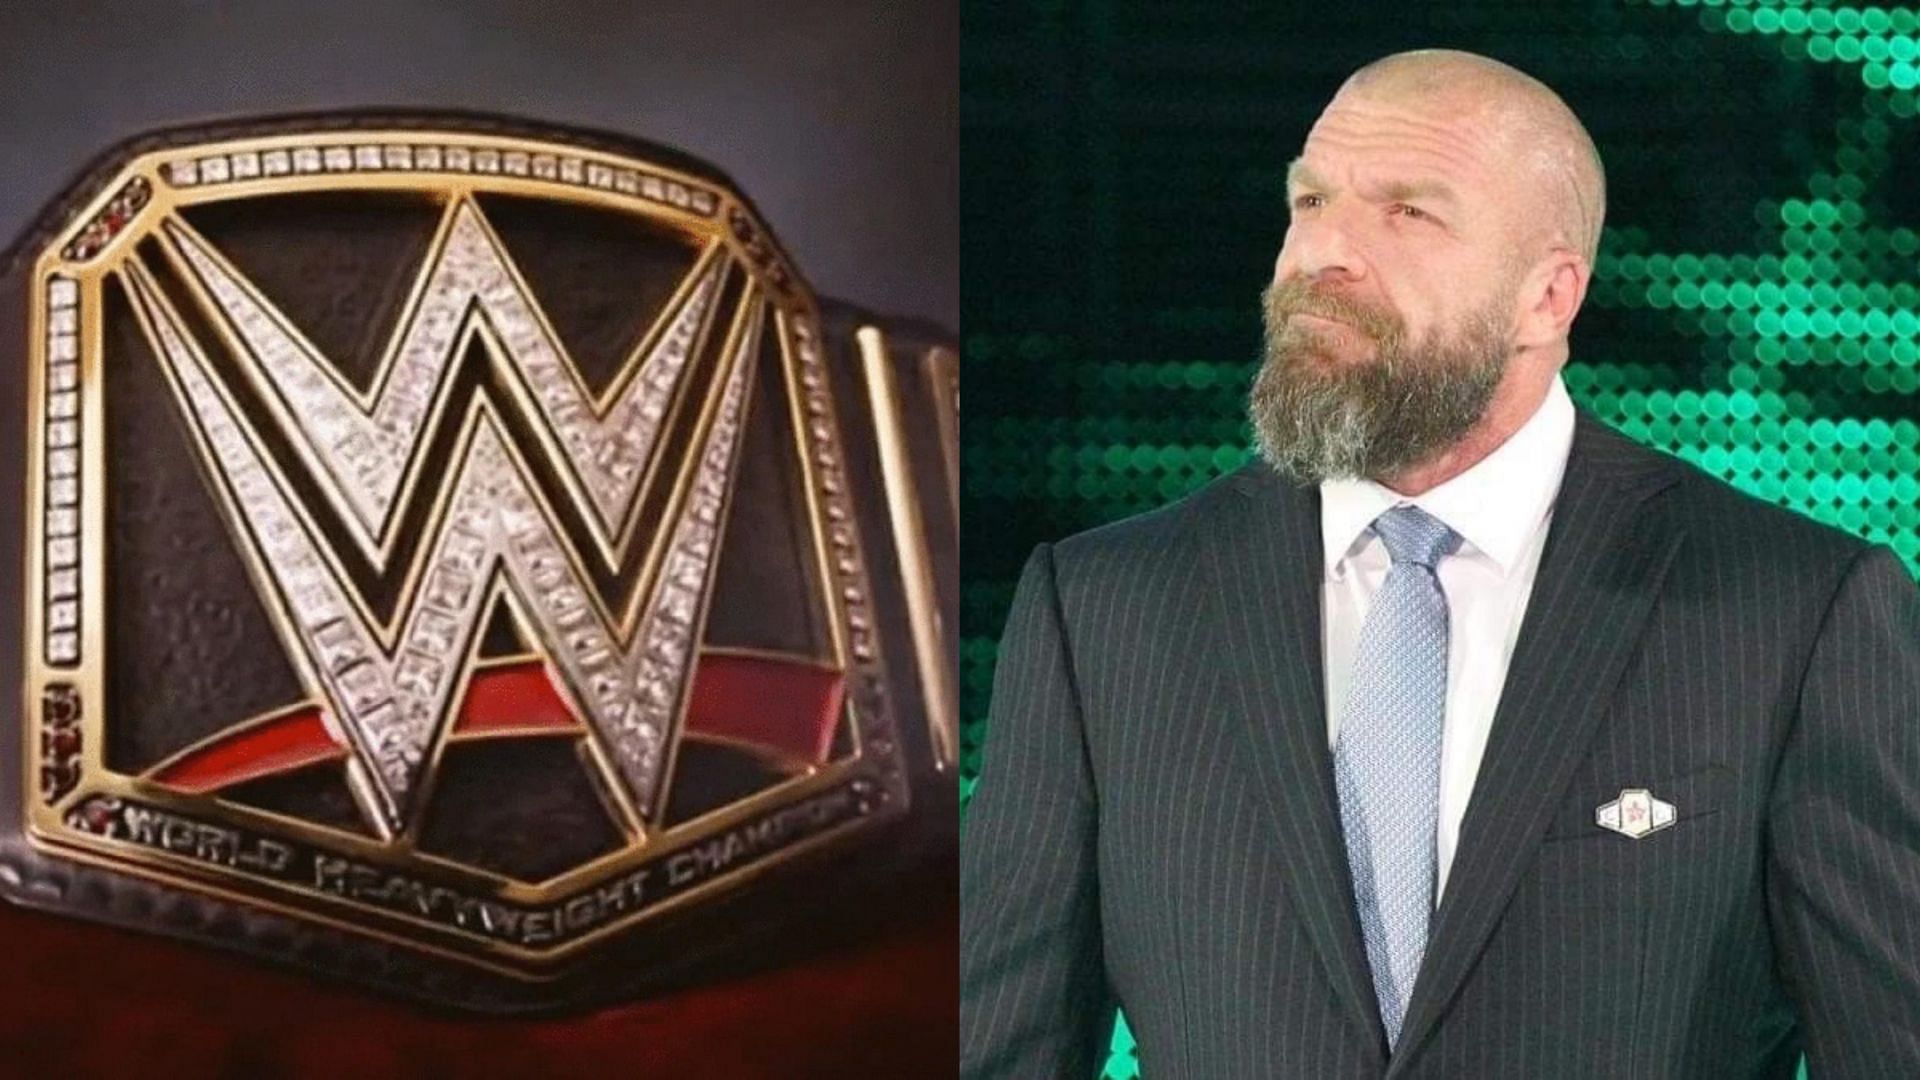 Triple H is one of WWE